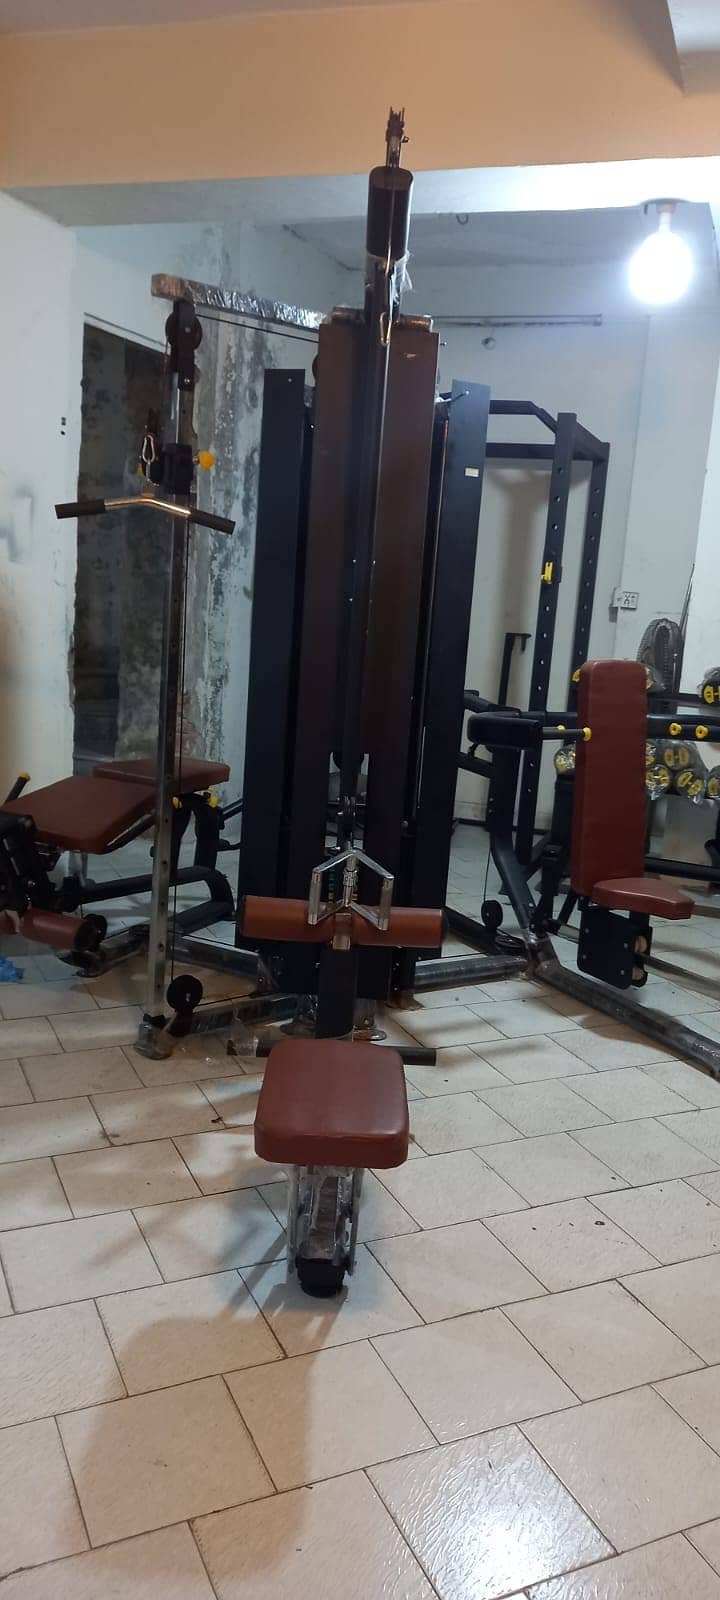 complete gym equipment setup Treadmill Elliptical dumbbell plate rod 4